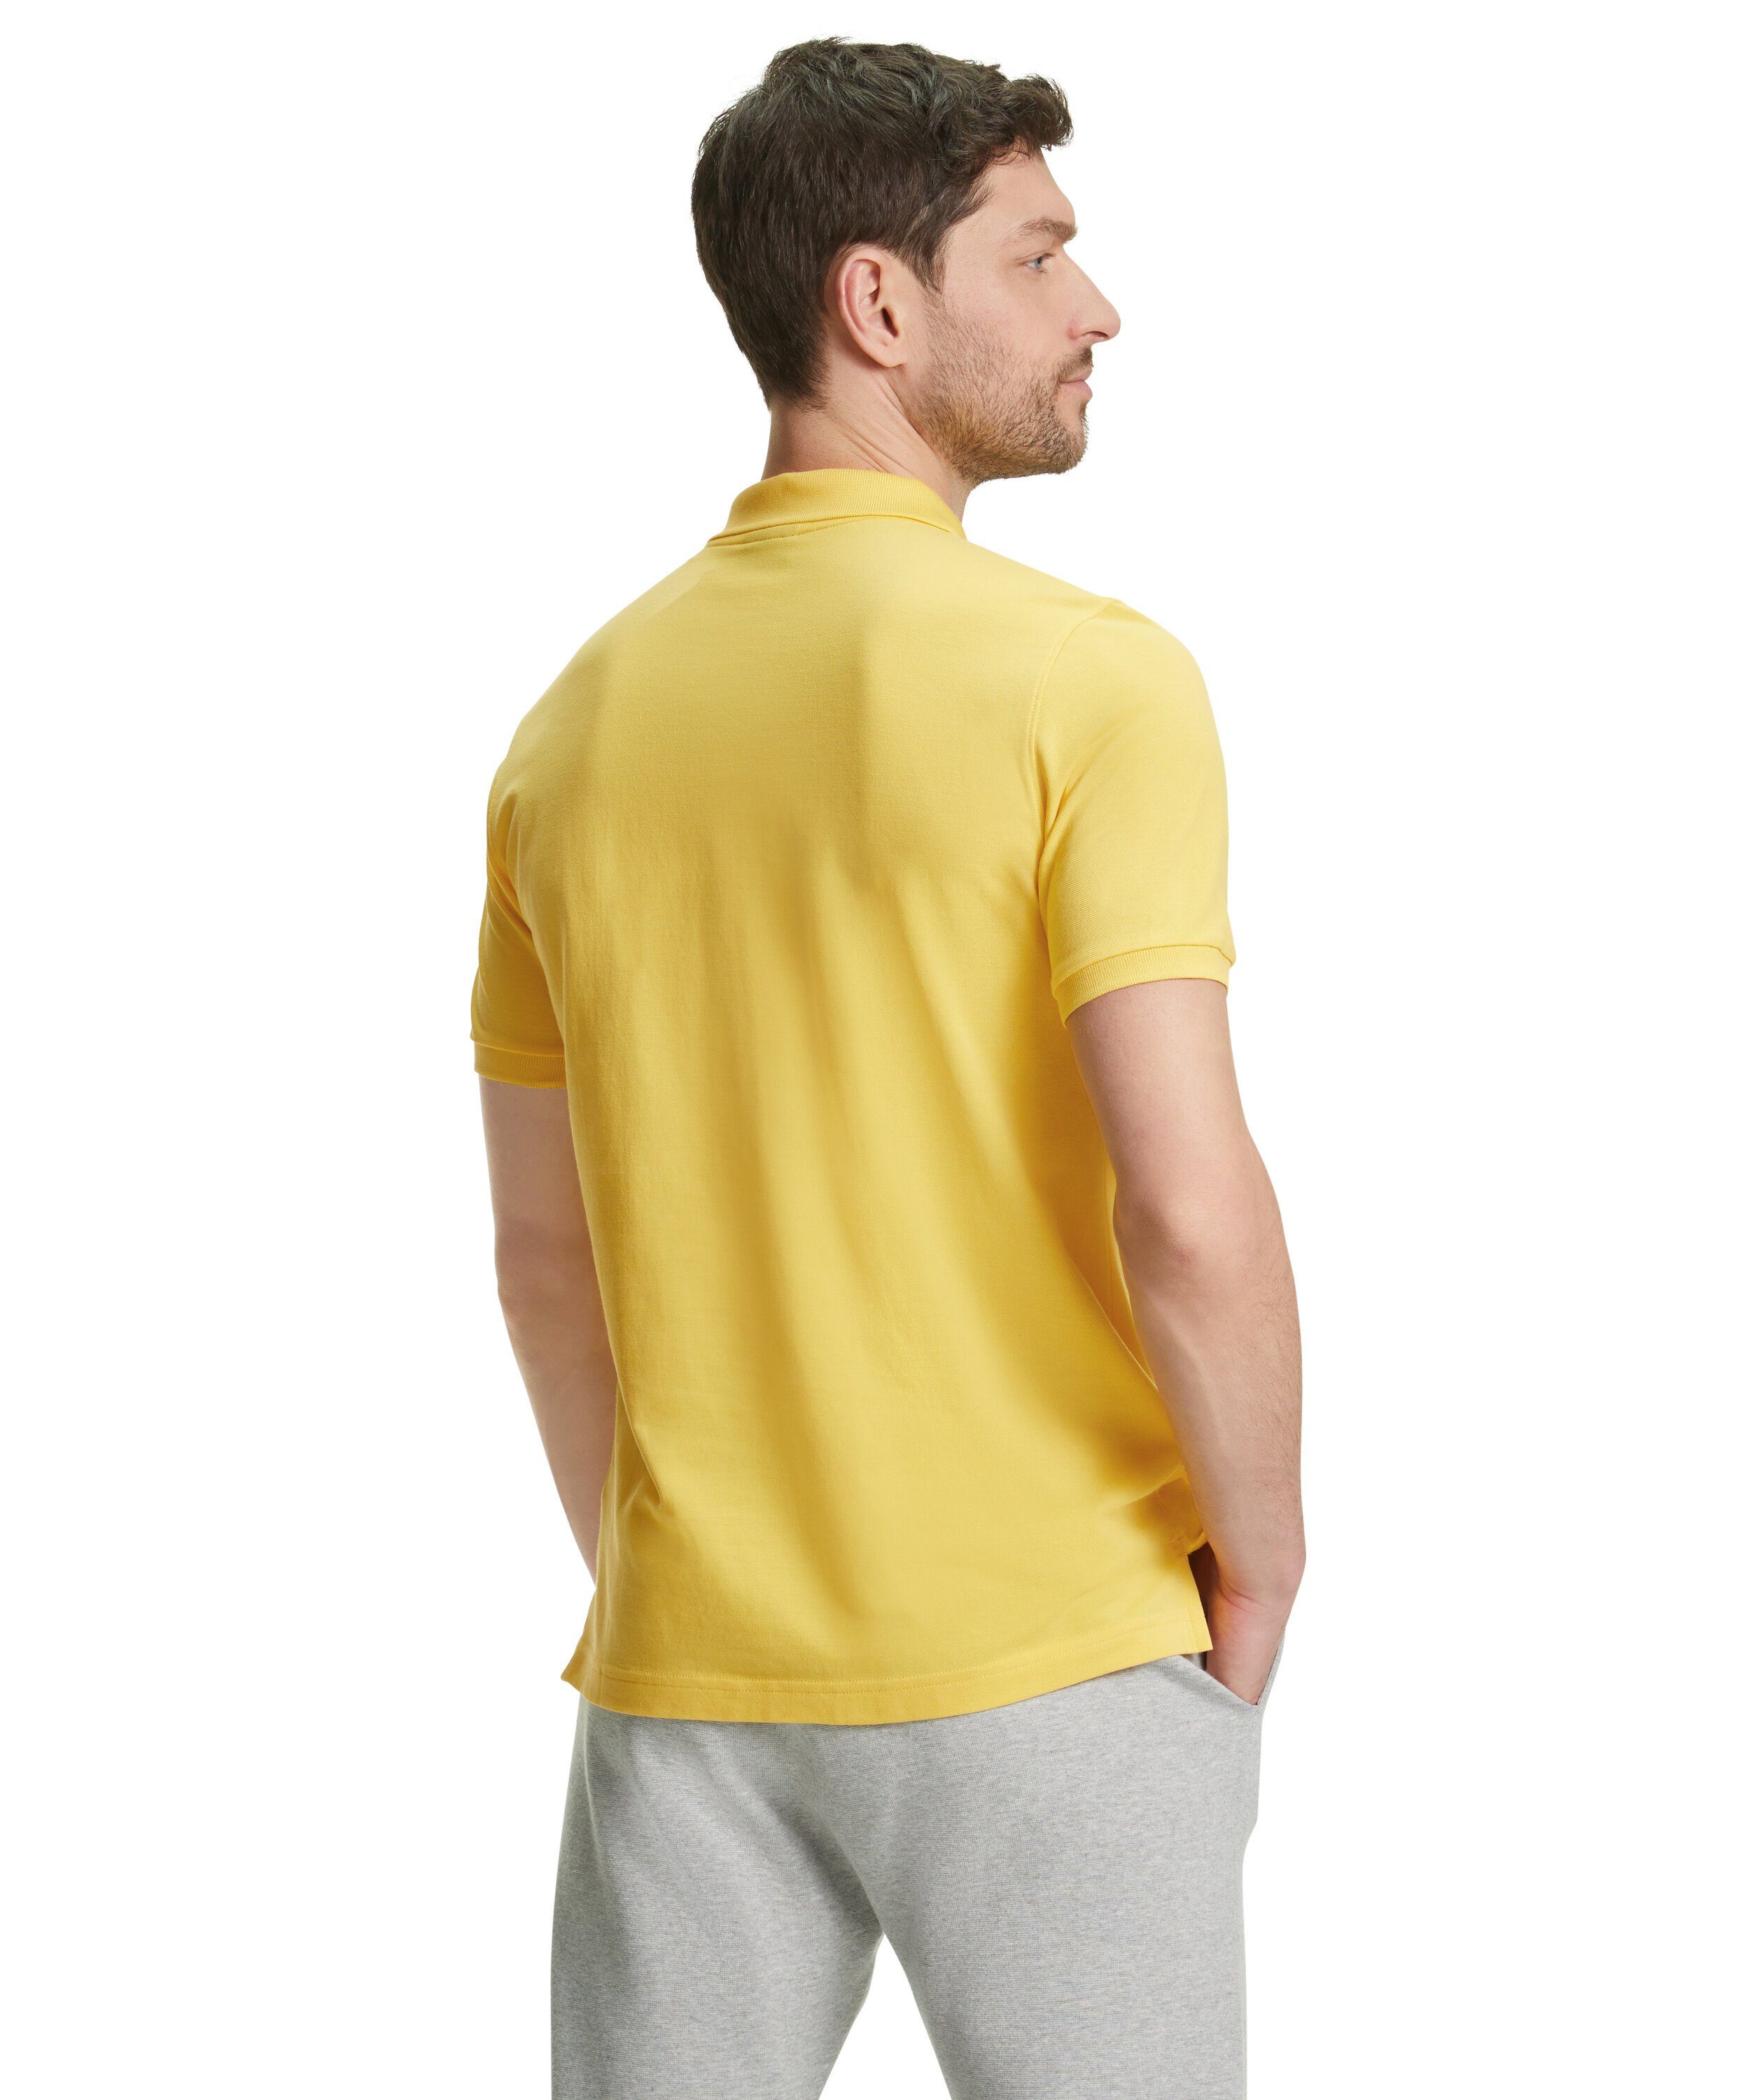 (1031) Pima-Baumwolle sun hochwertiger aus Poloshirt bright FALKE